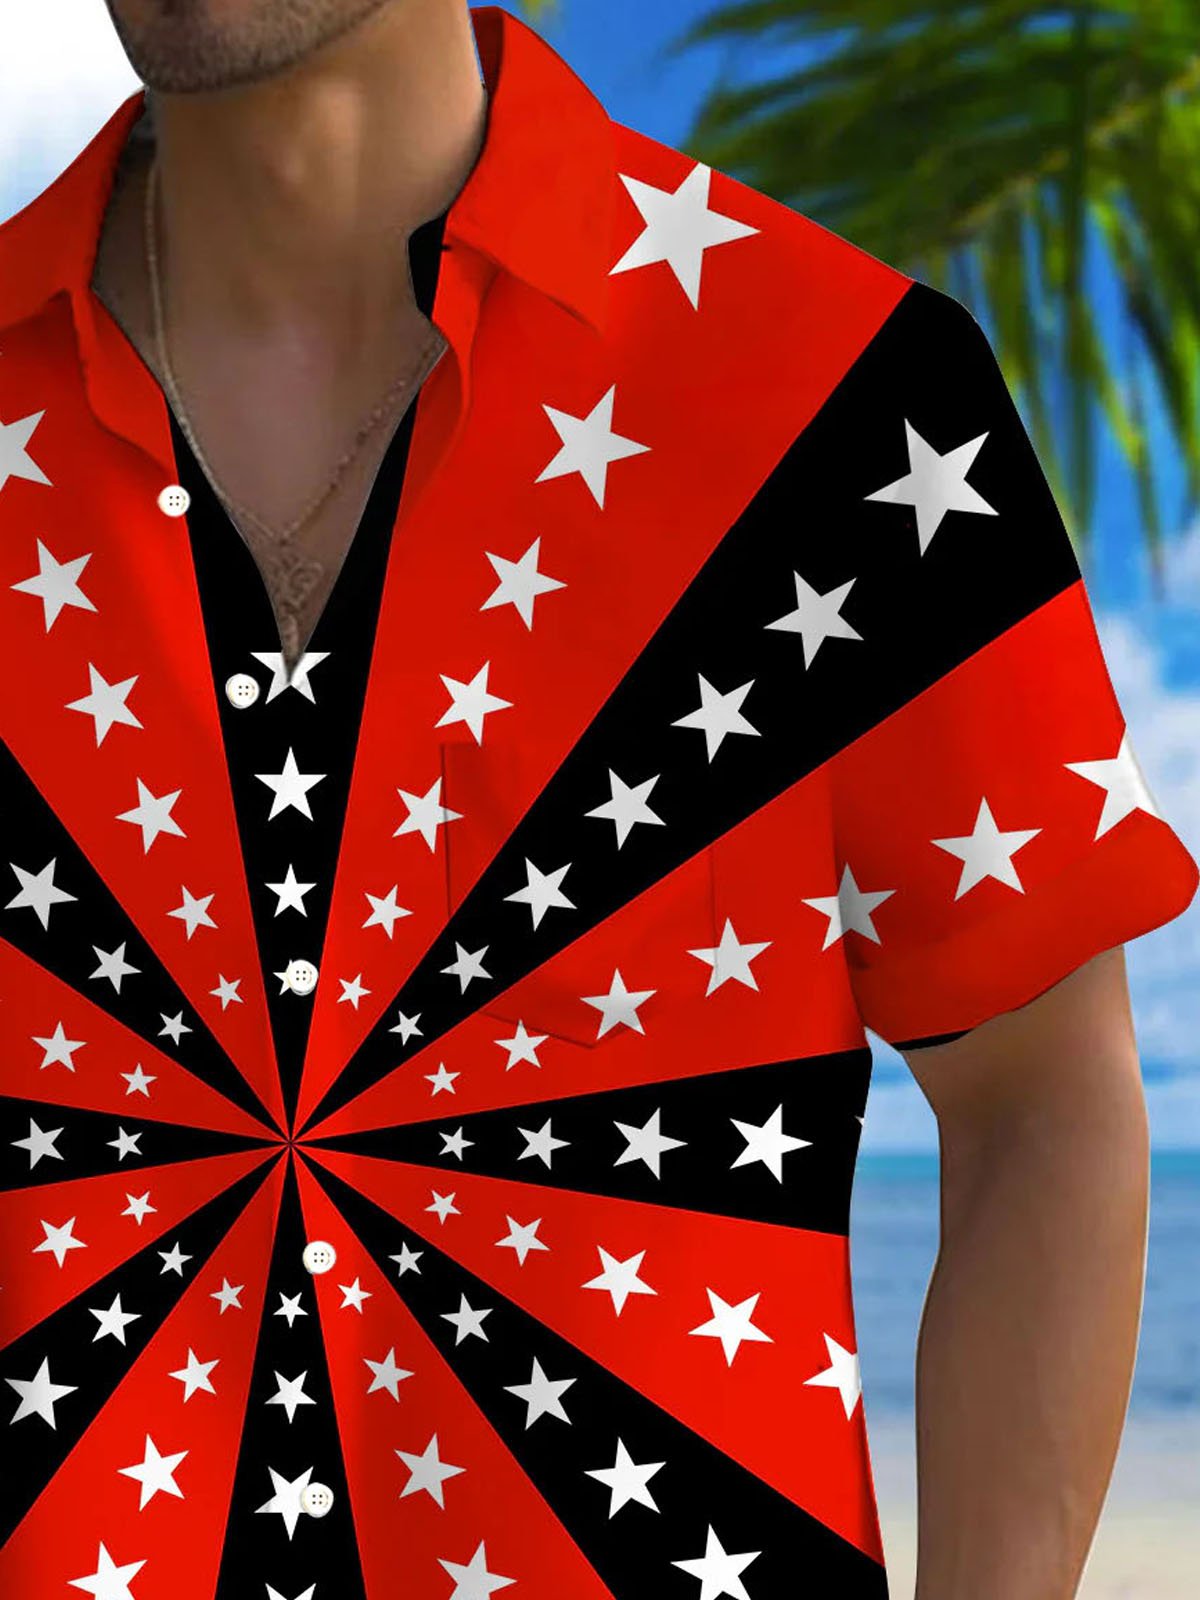 Royaura® Retro Flag 3D Print Men's Button Pocket Short Sleeve Shirt